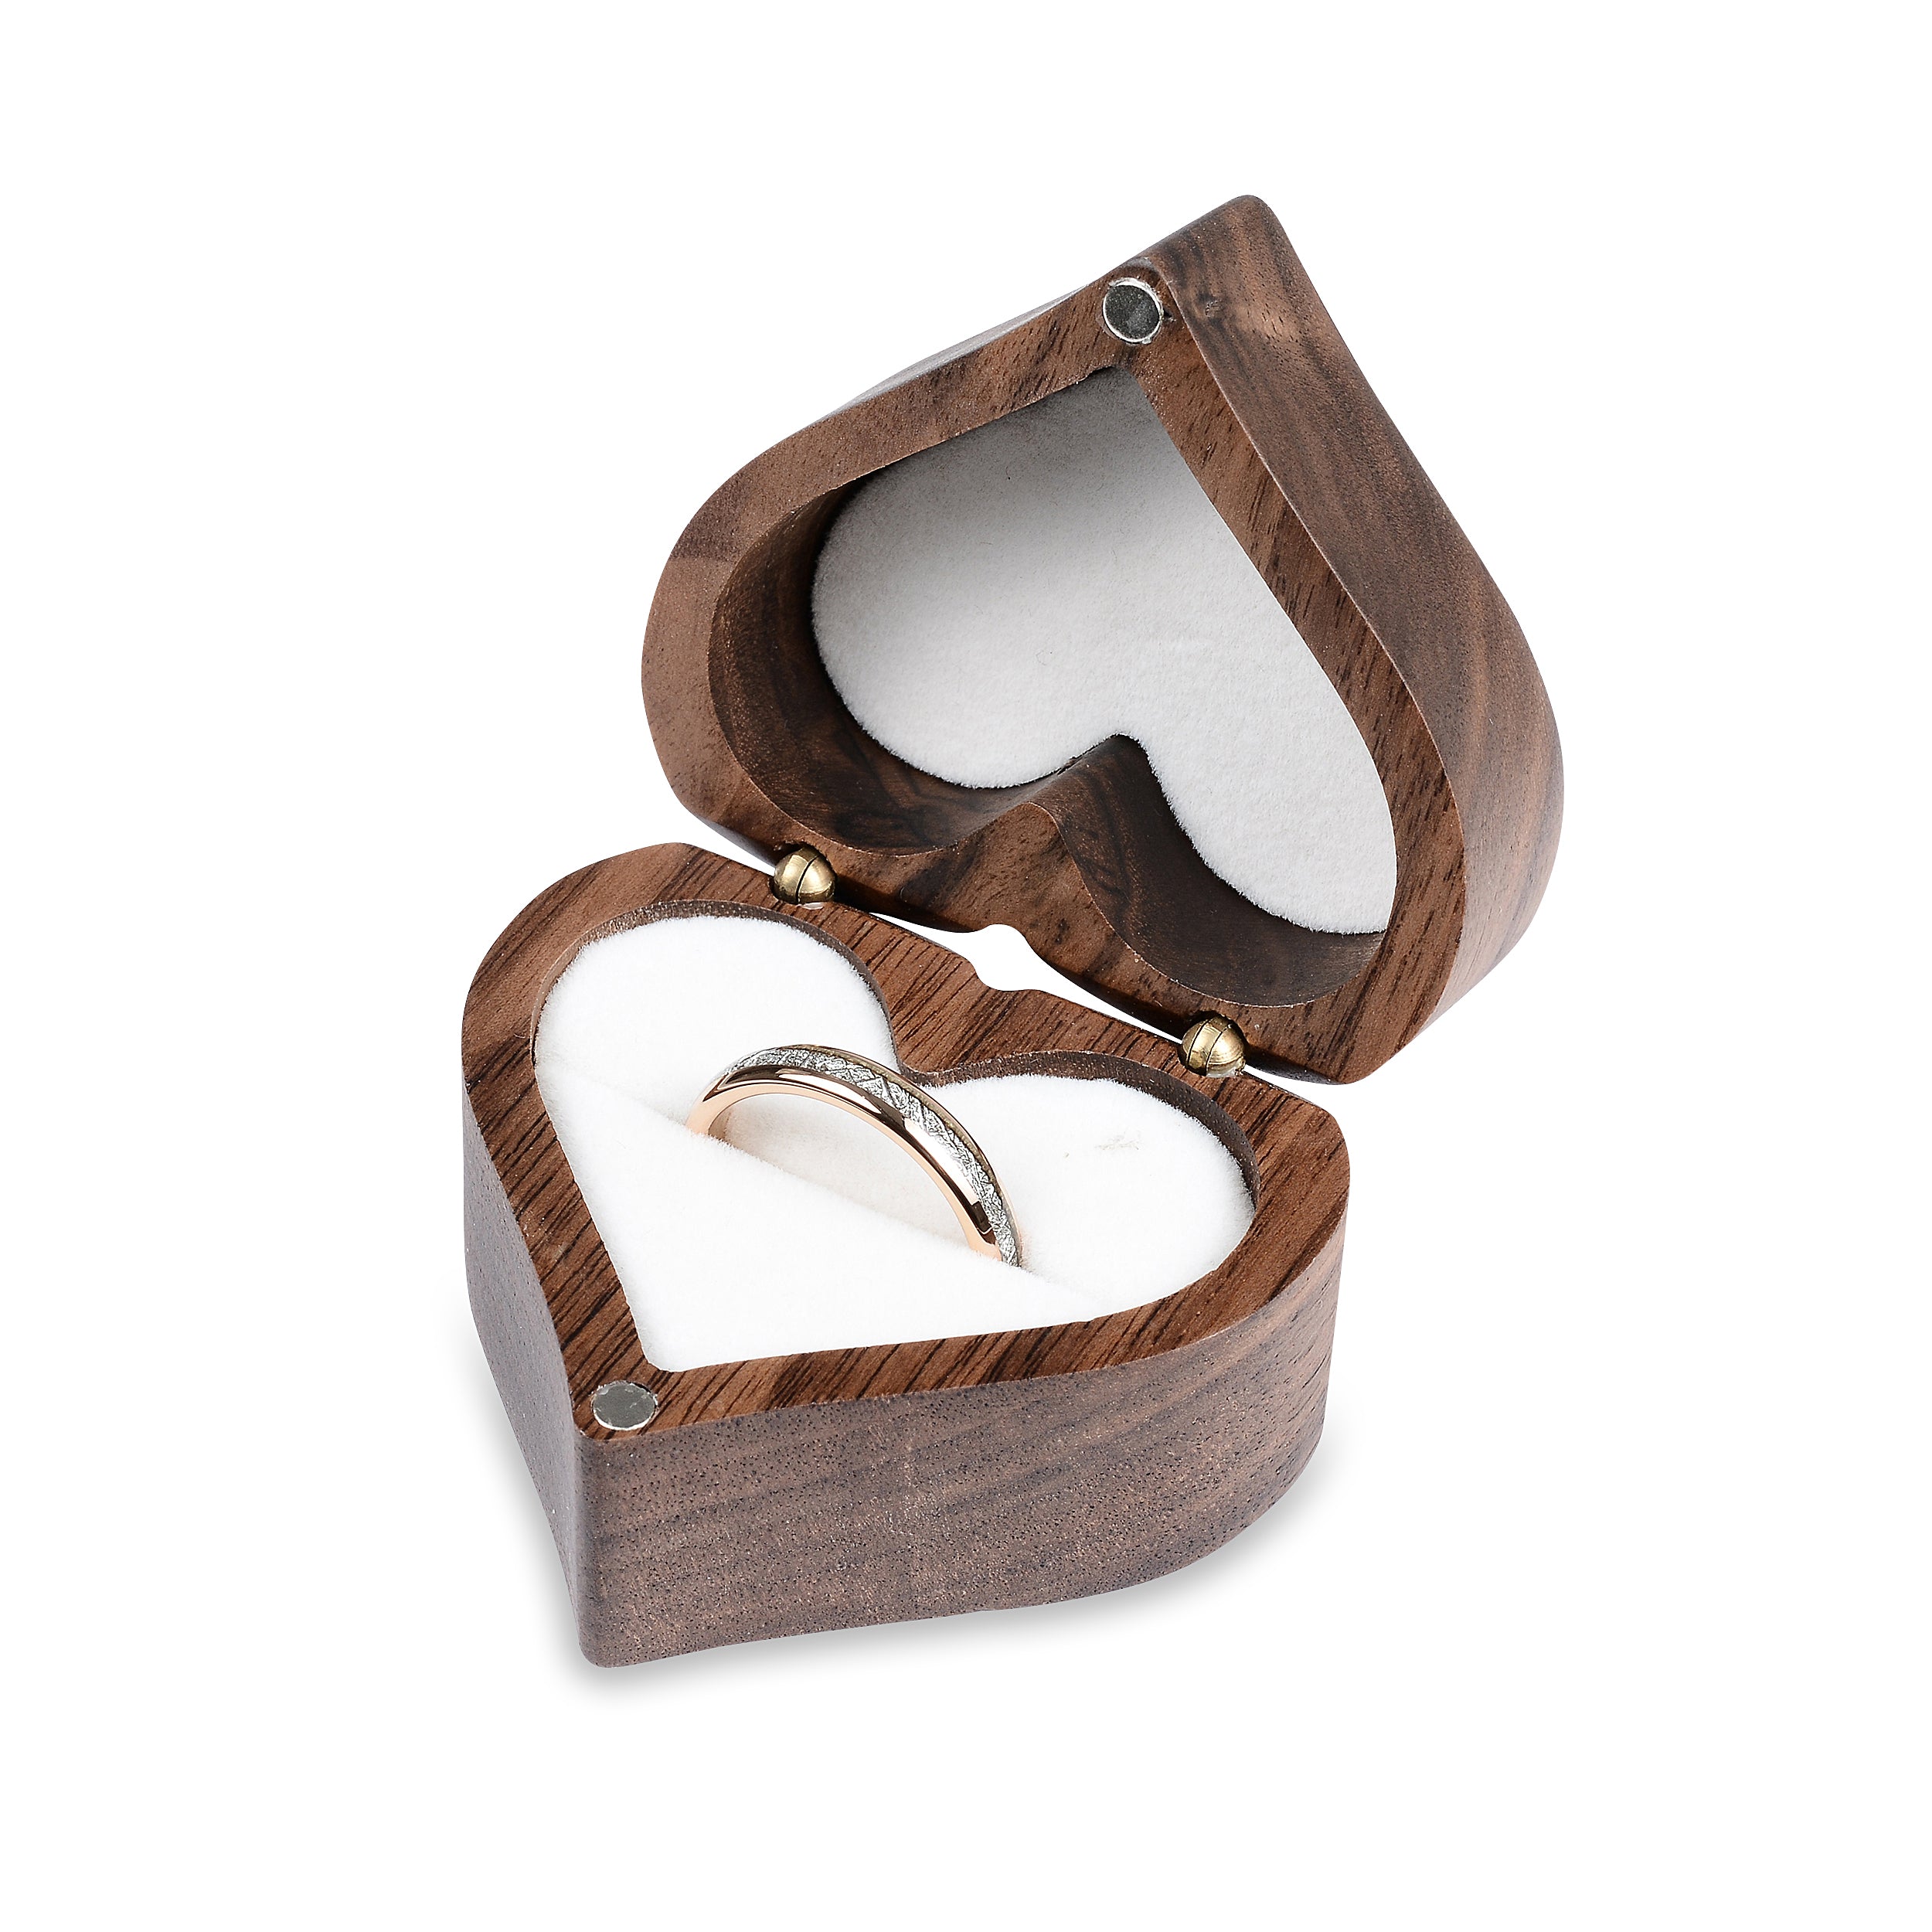 White Heart - Premium Real Wood Velvet Cushion Ring Box With Magnetic Lid